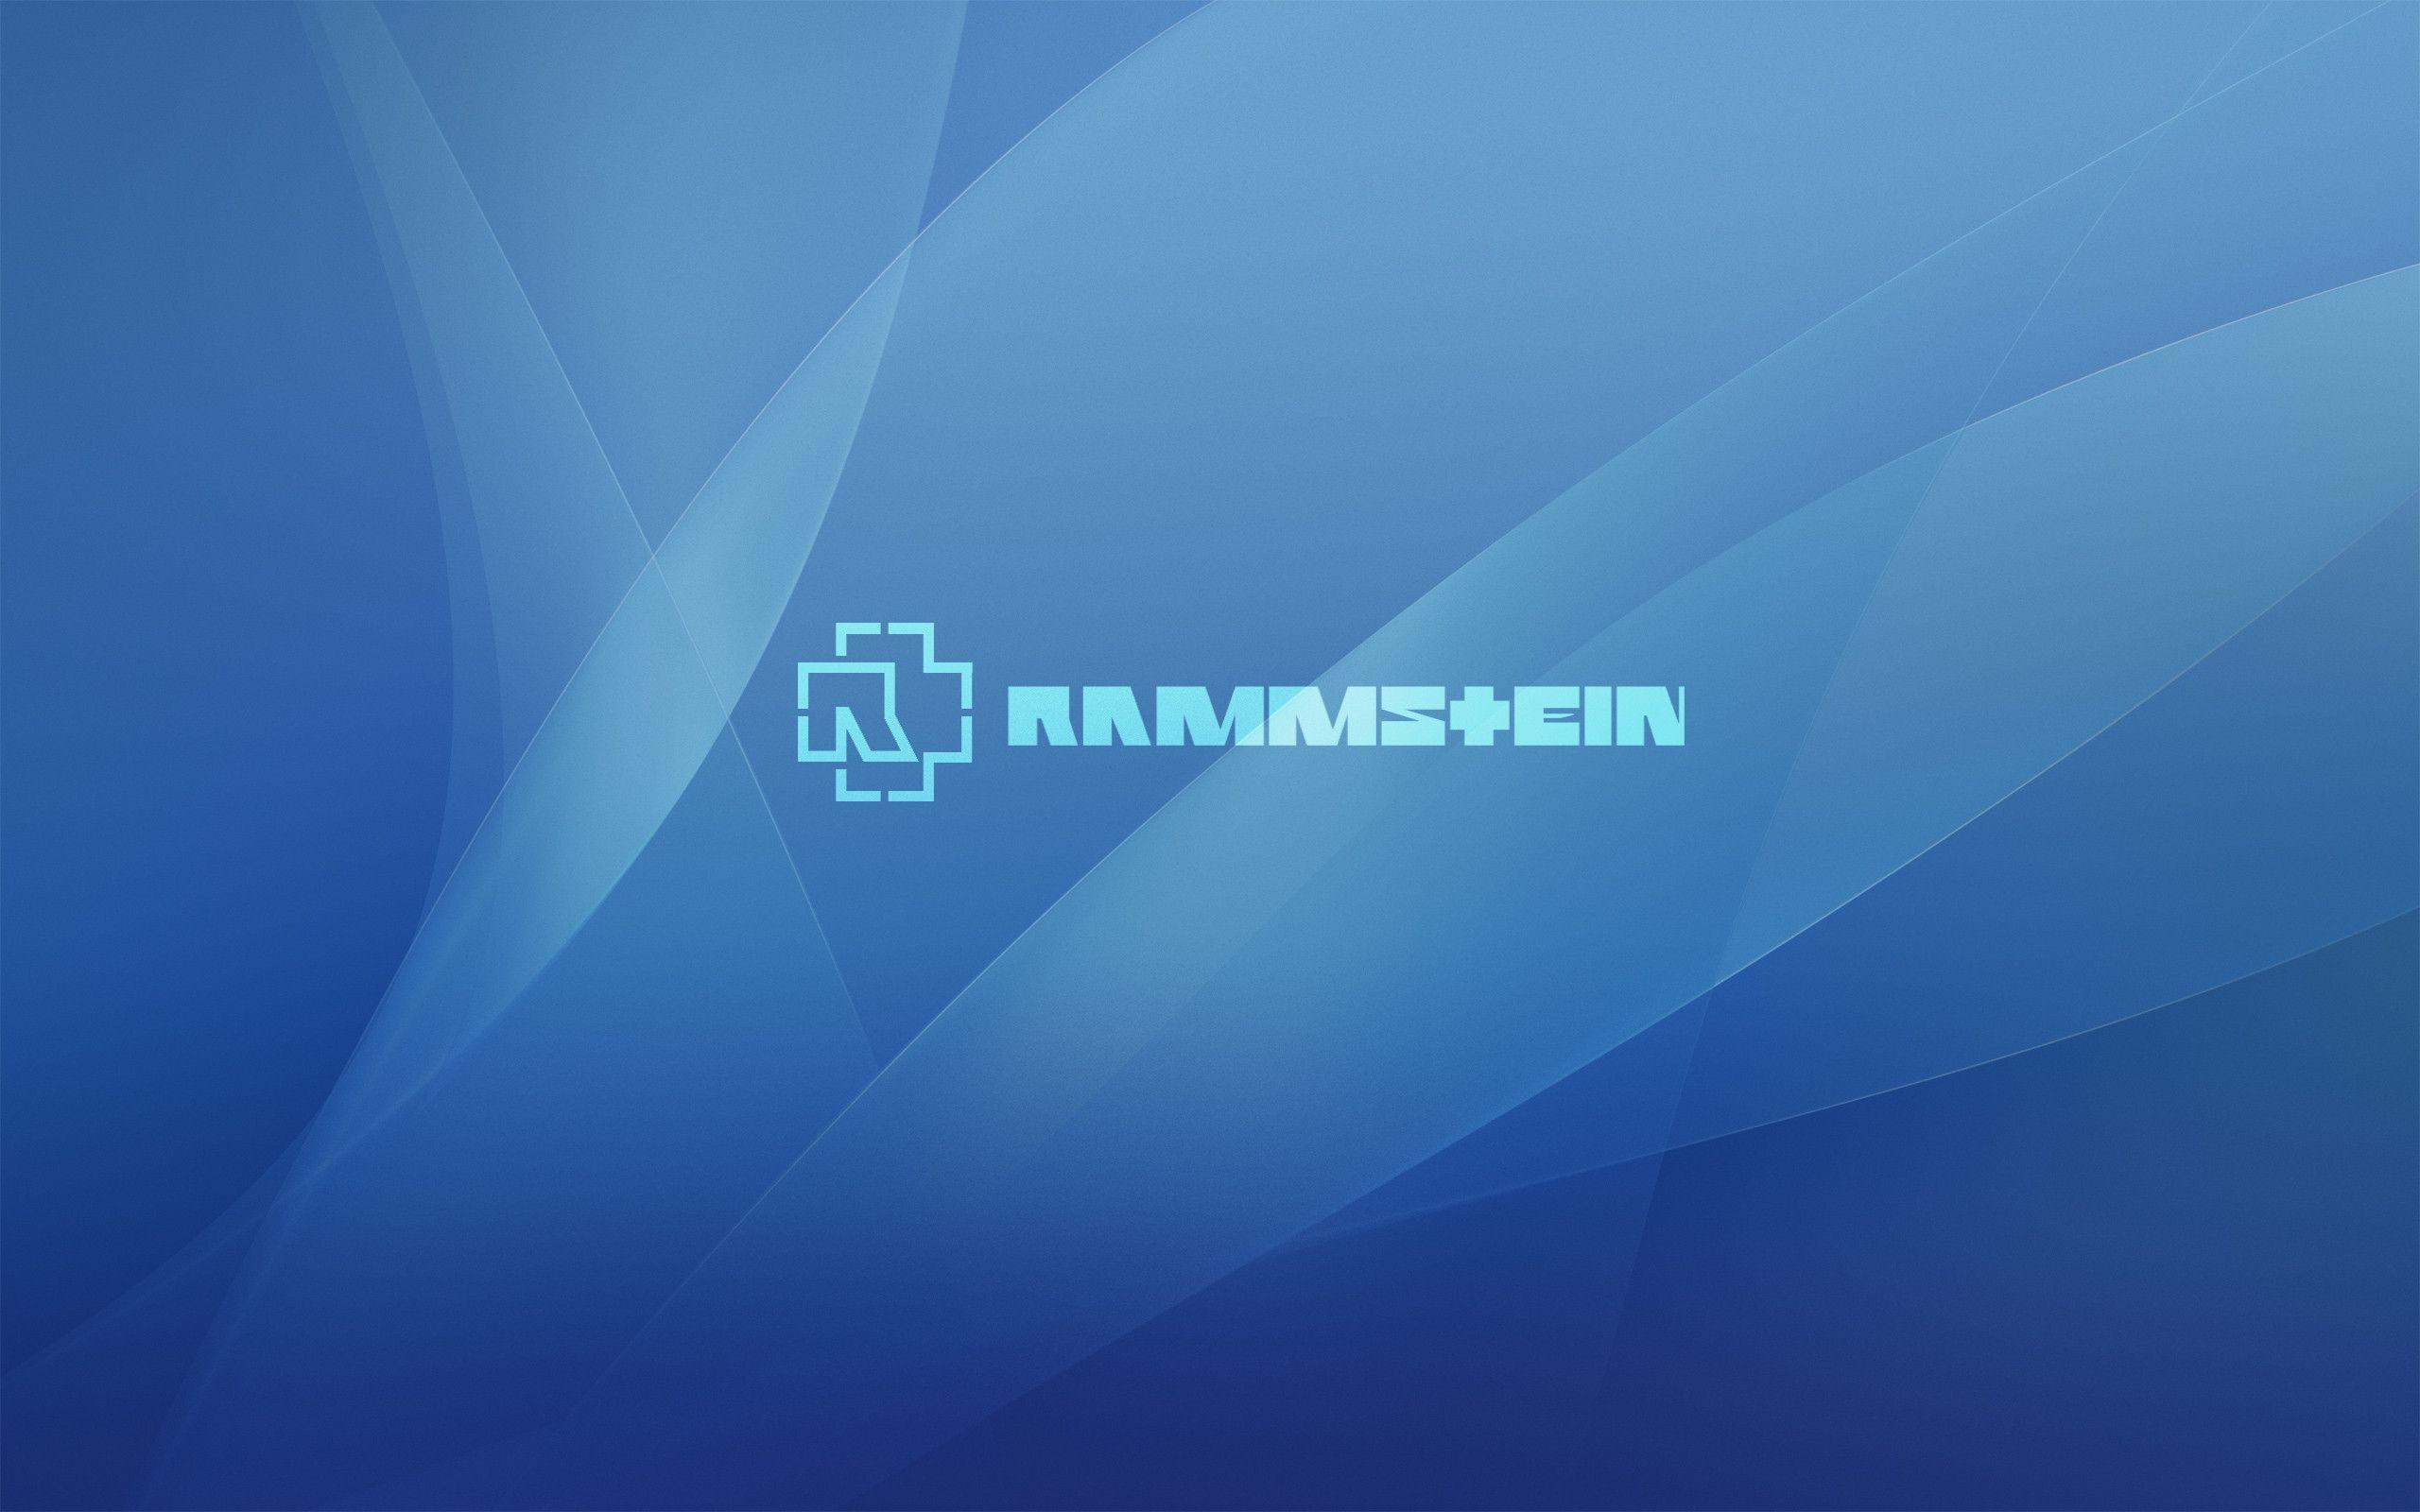 Rammstein Computer Wallpapers, Desktop Backgrounds 2560x1600 Id: 75980